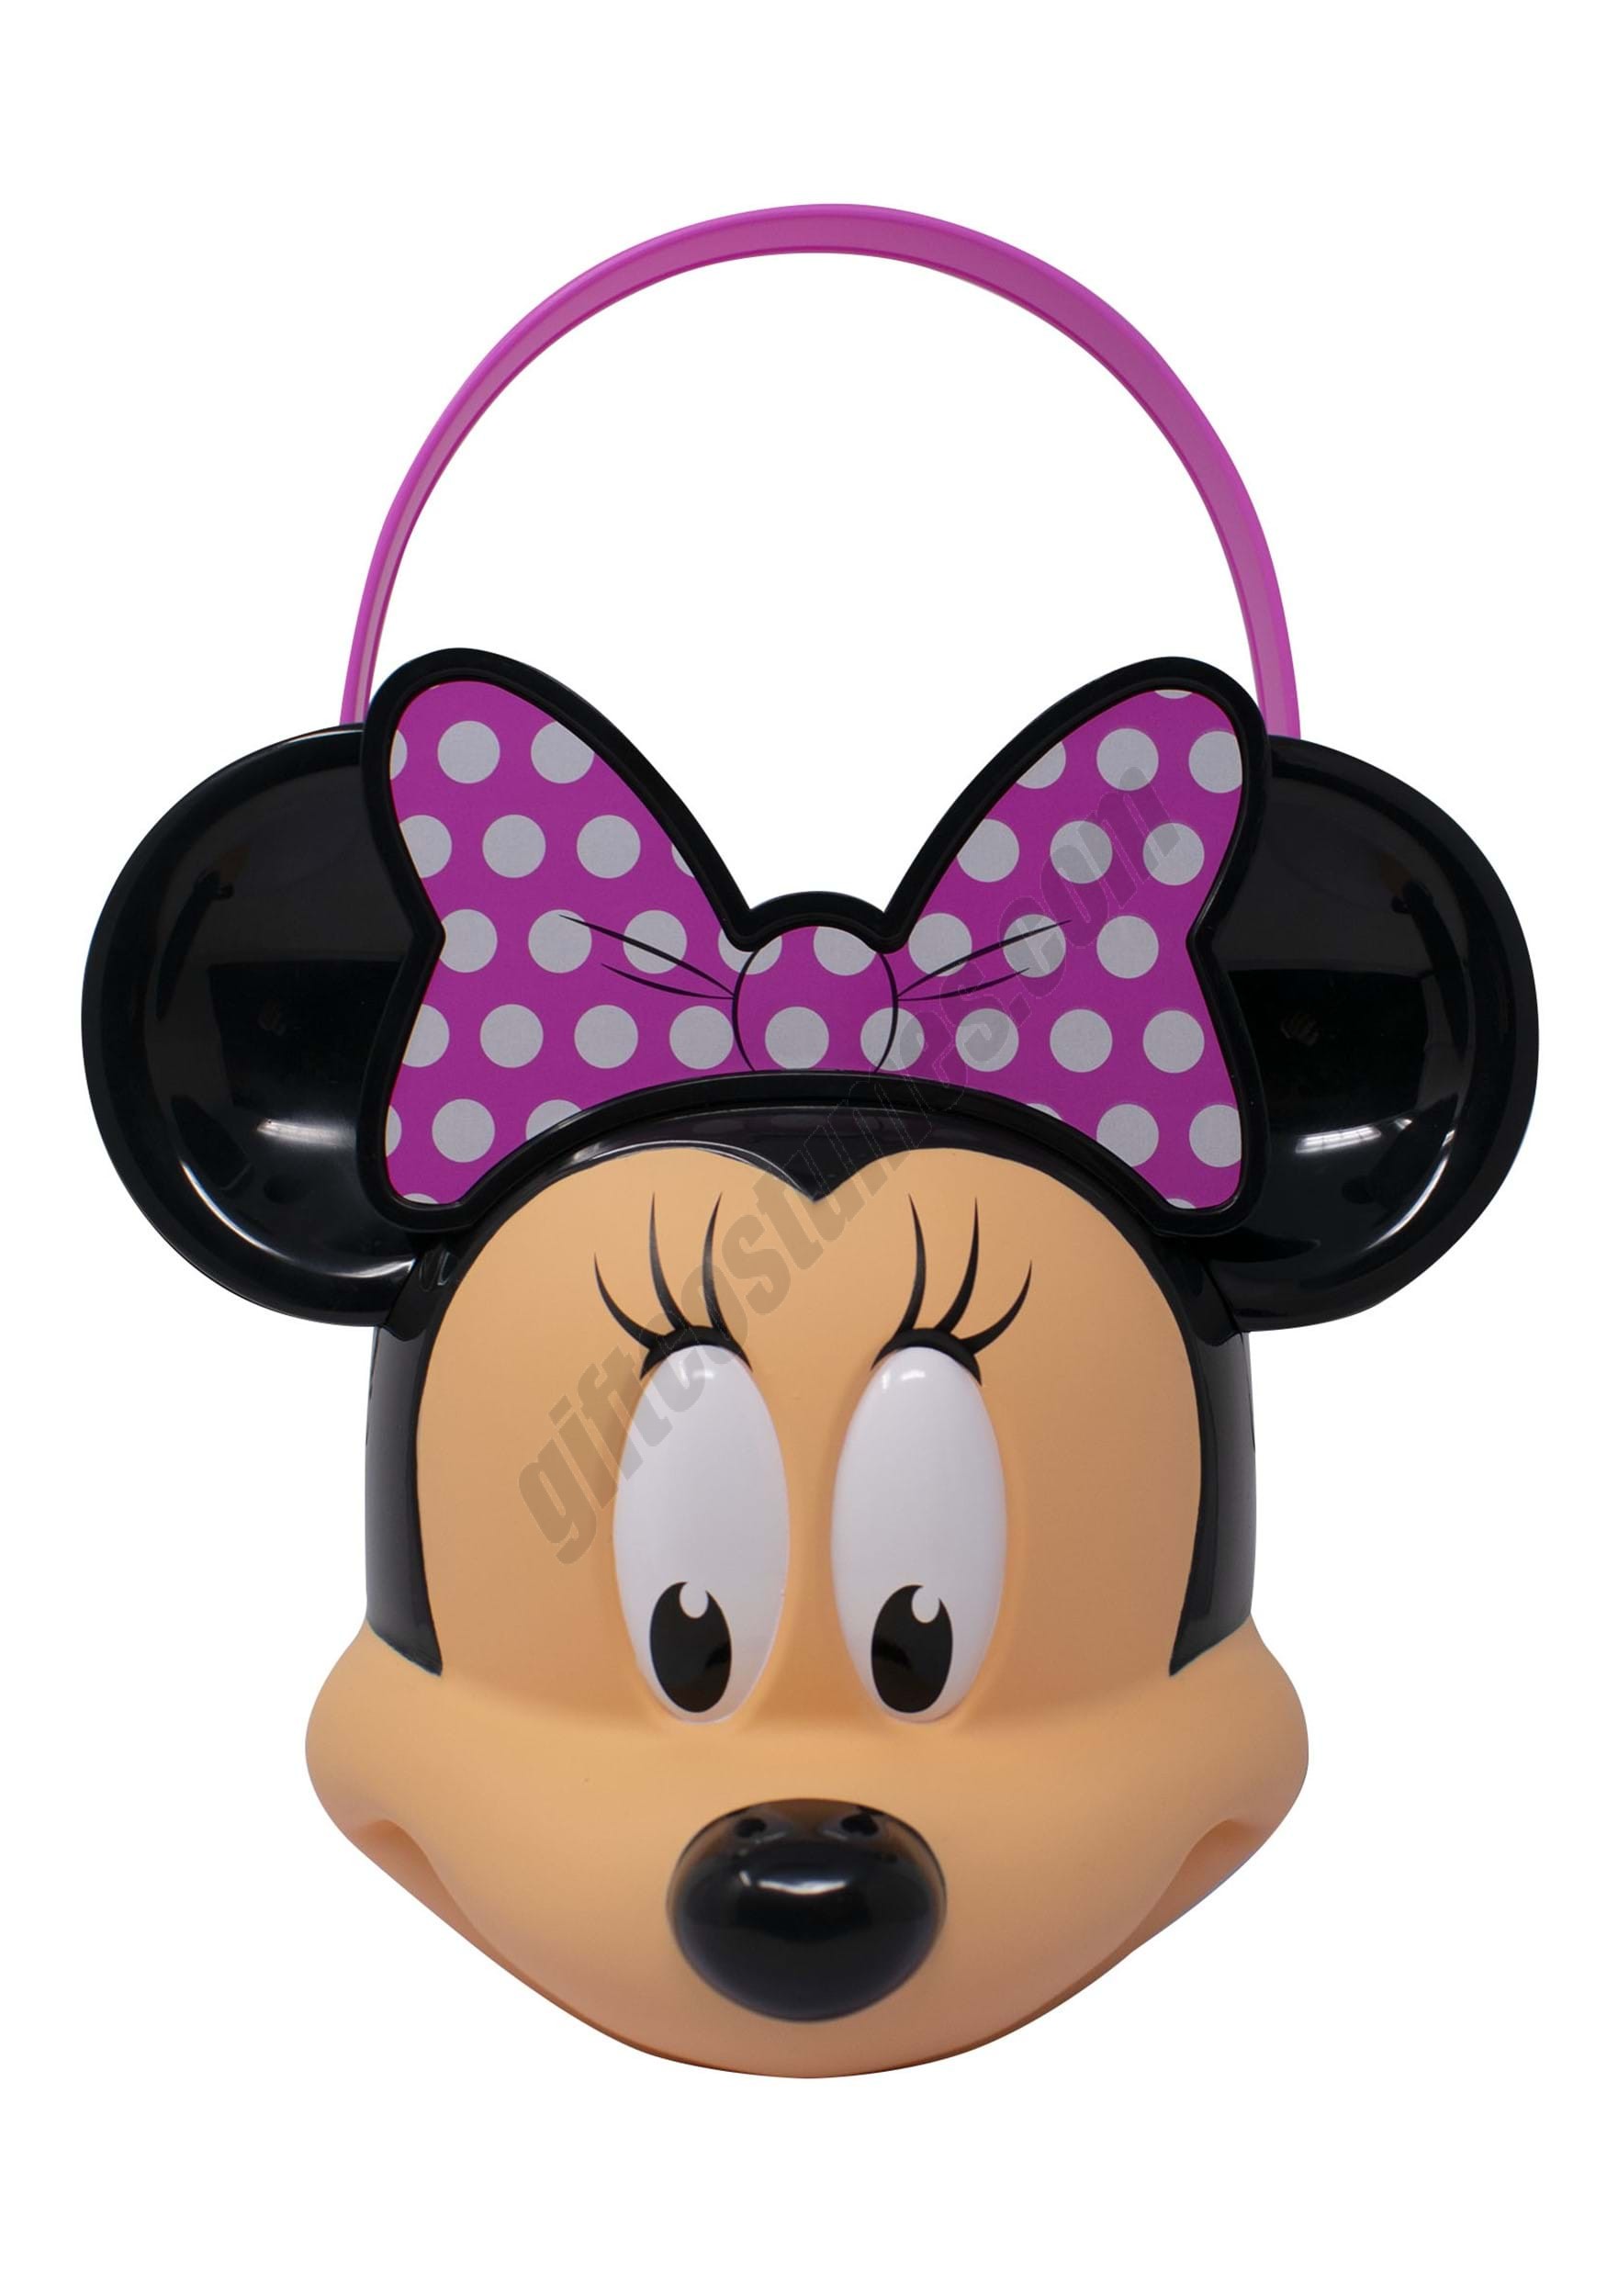 Plastic Minnie Mouse Trick or Treat Pail Promotions - Plastic Minnie Mouse Trick or Treat Pail Promotions